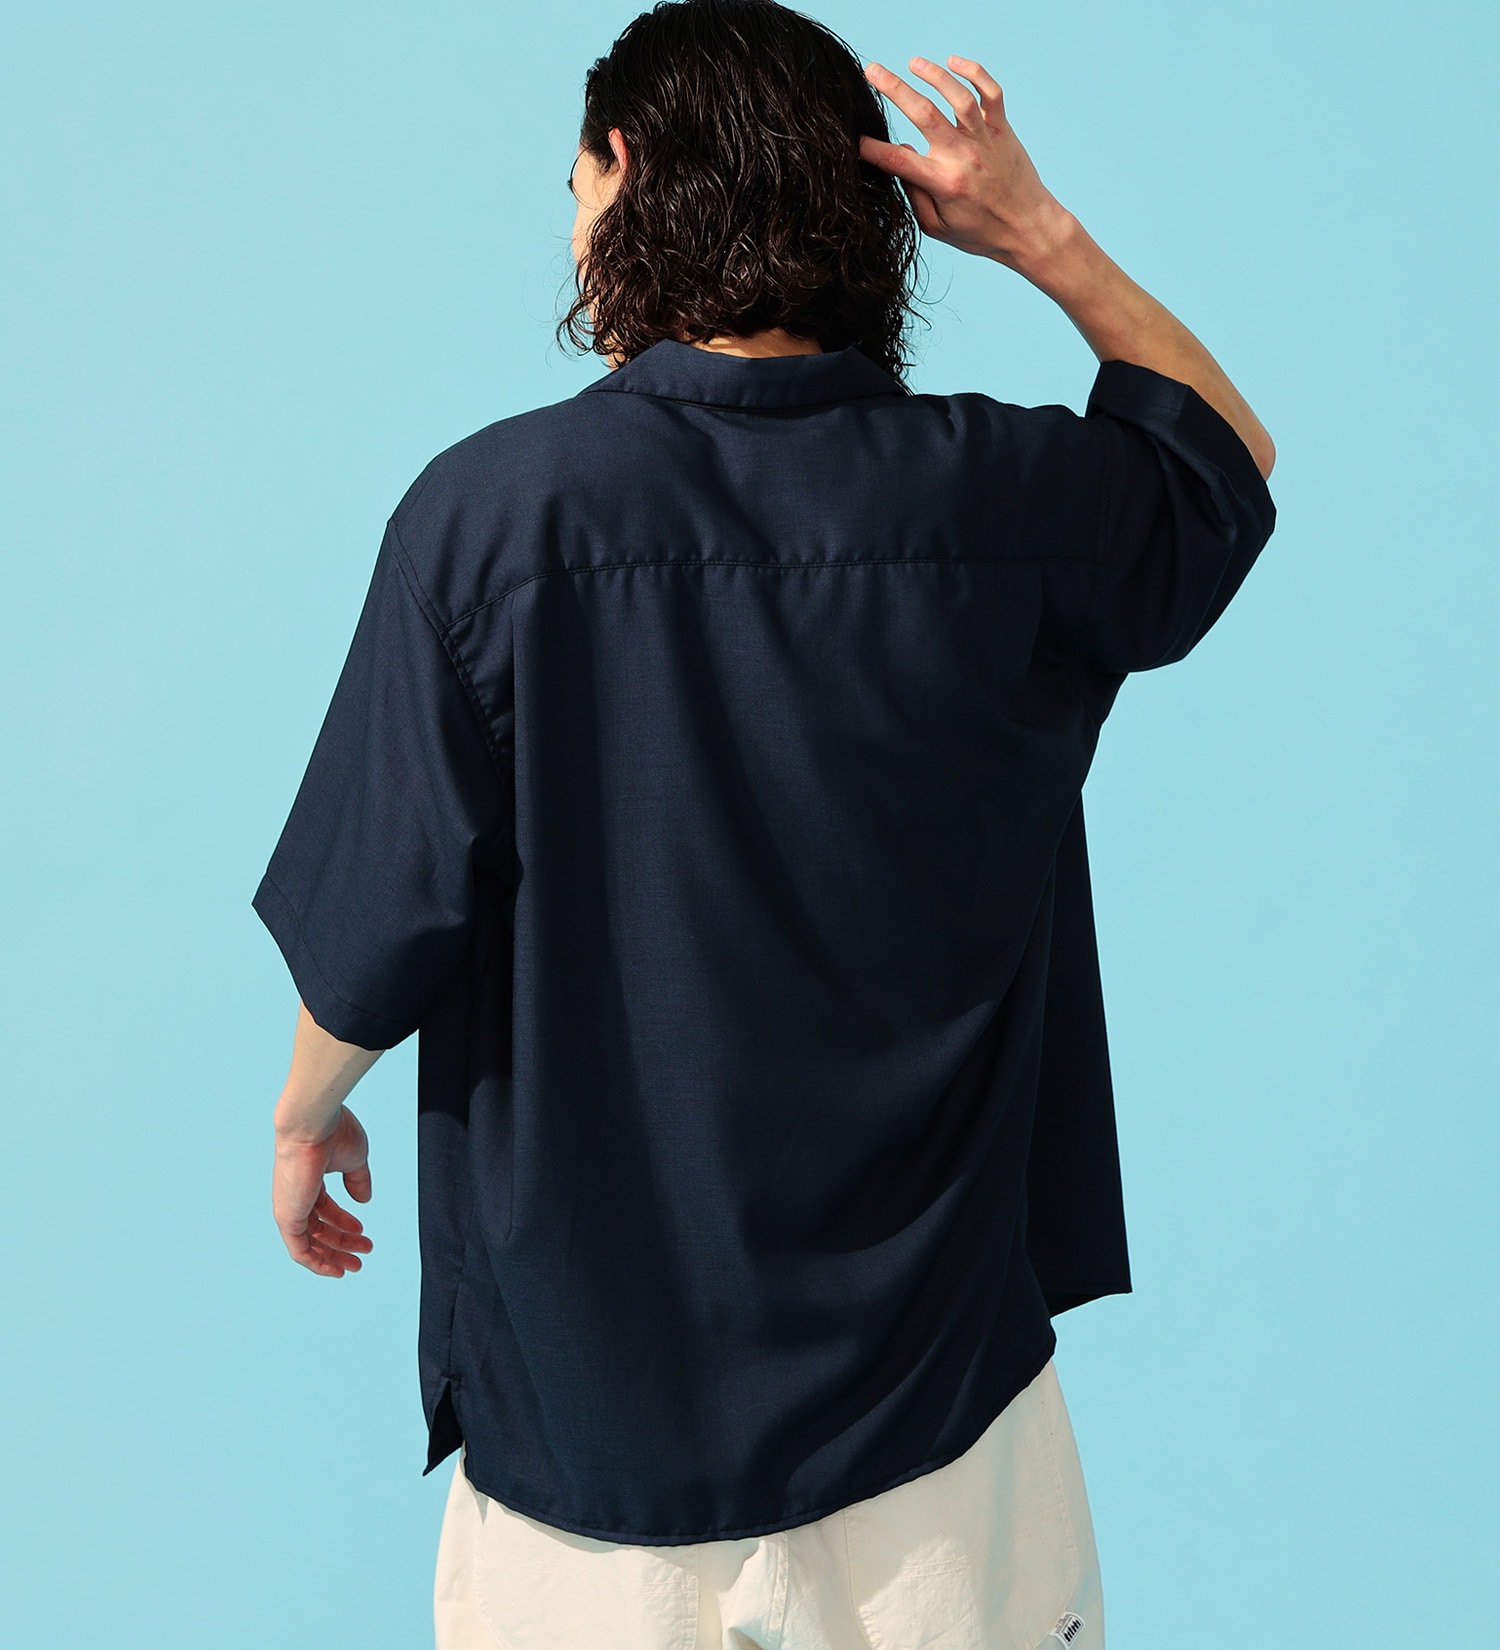 Lee(リー)のオープンカラーシャツ|トップス/シャツ/ブラウス/メンズ|チャコールグレー